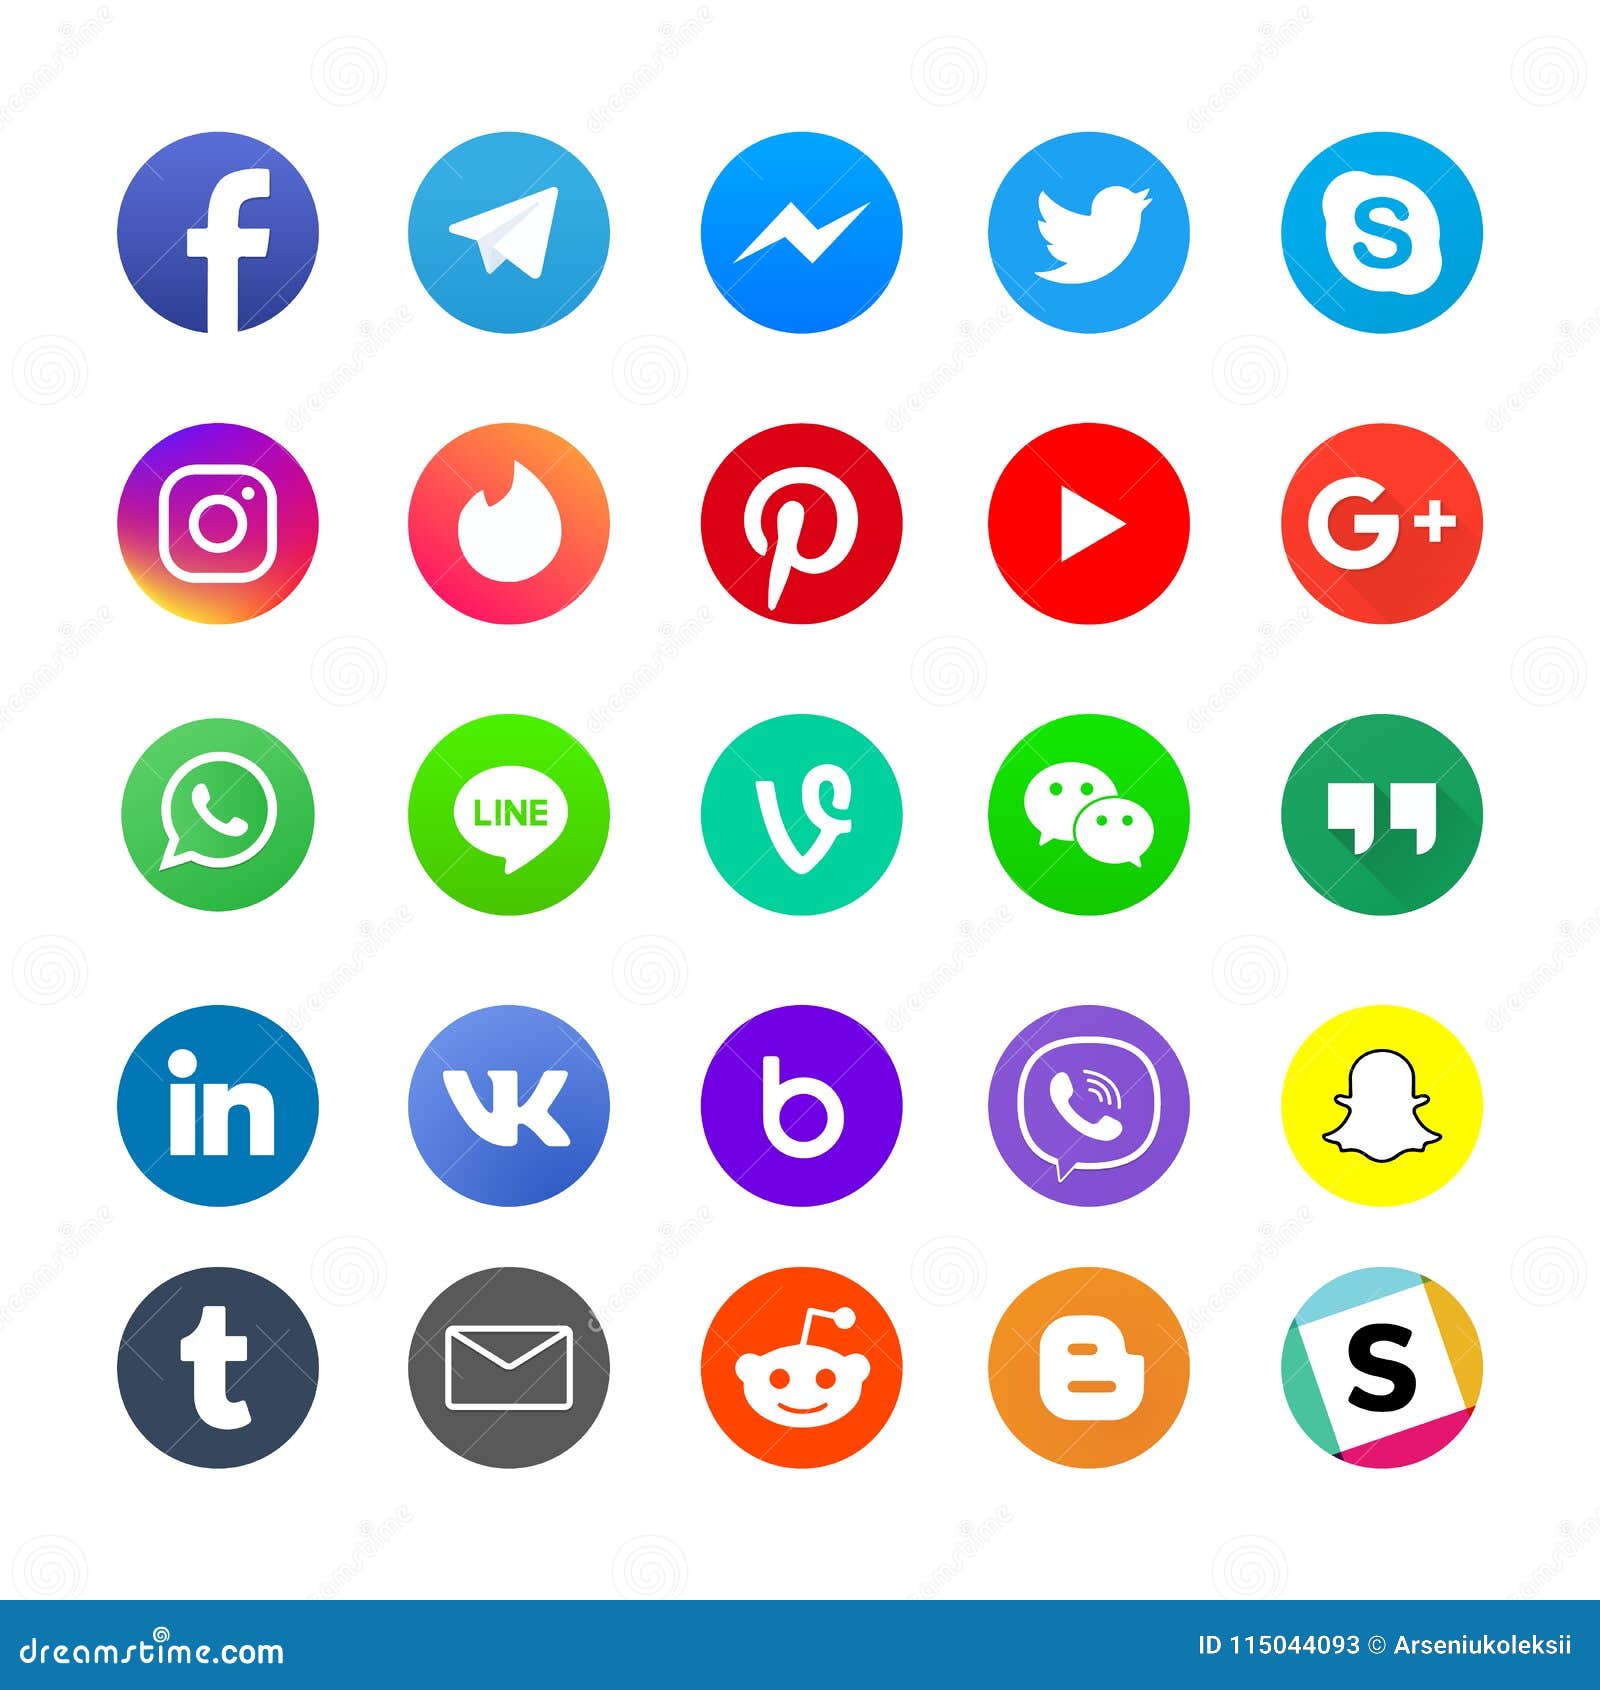 Popular Social Media App And Messenger Icons Set Editorial ...